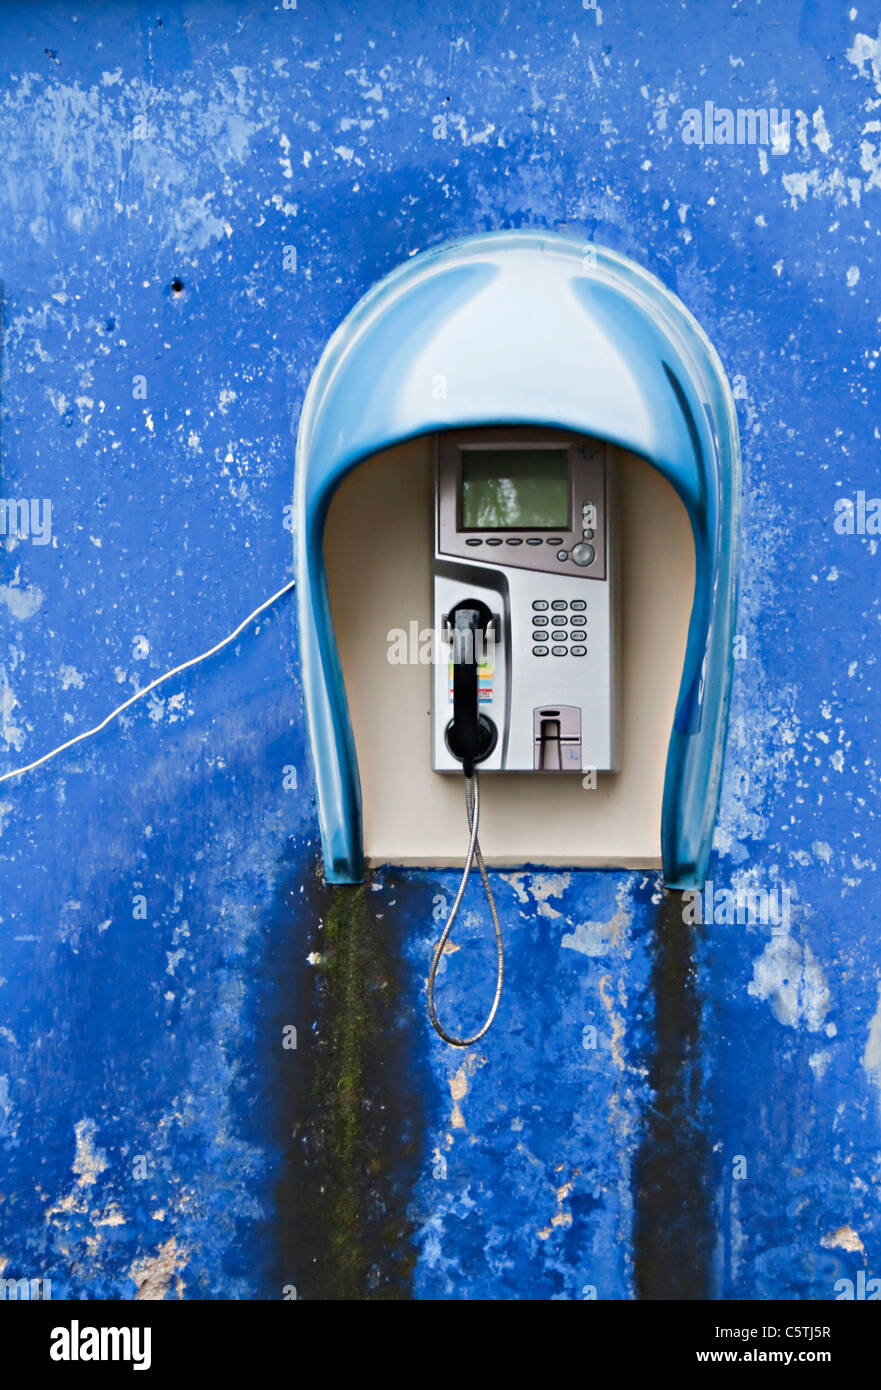 Asia, China, Public Telephone box, close-up Stock Photo